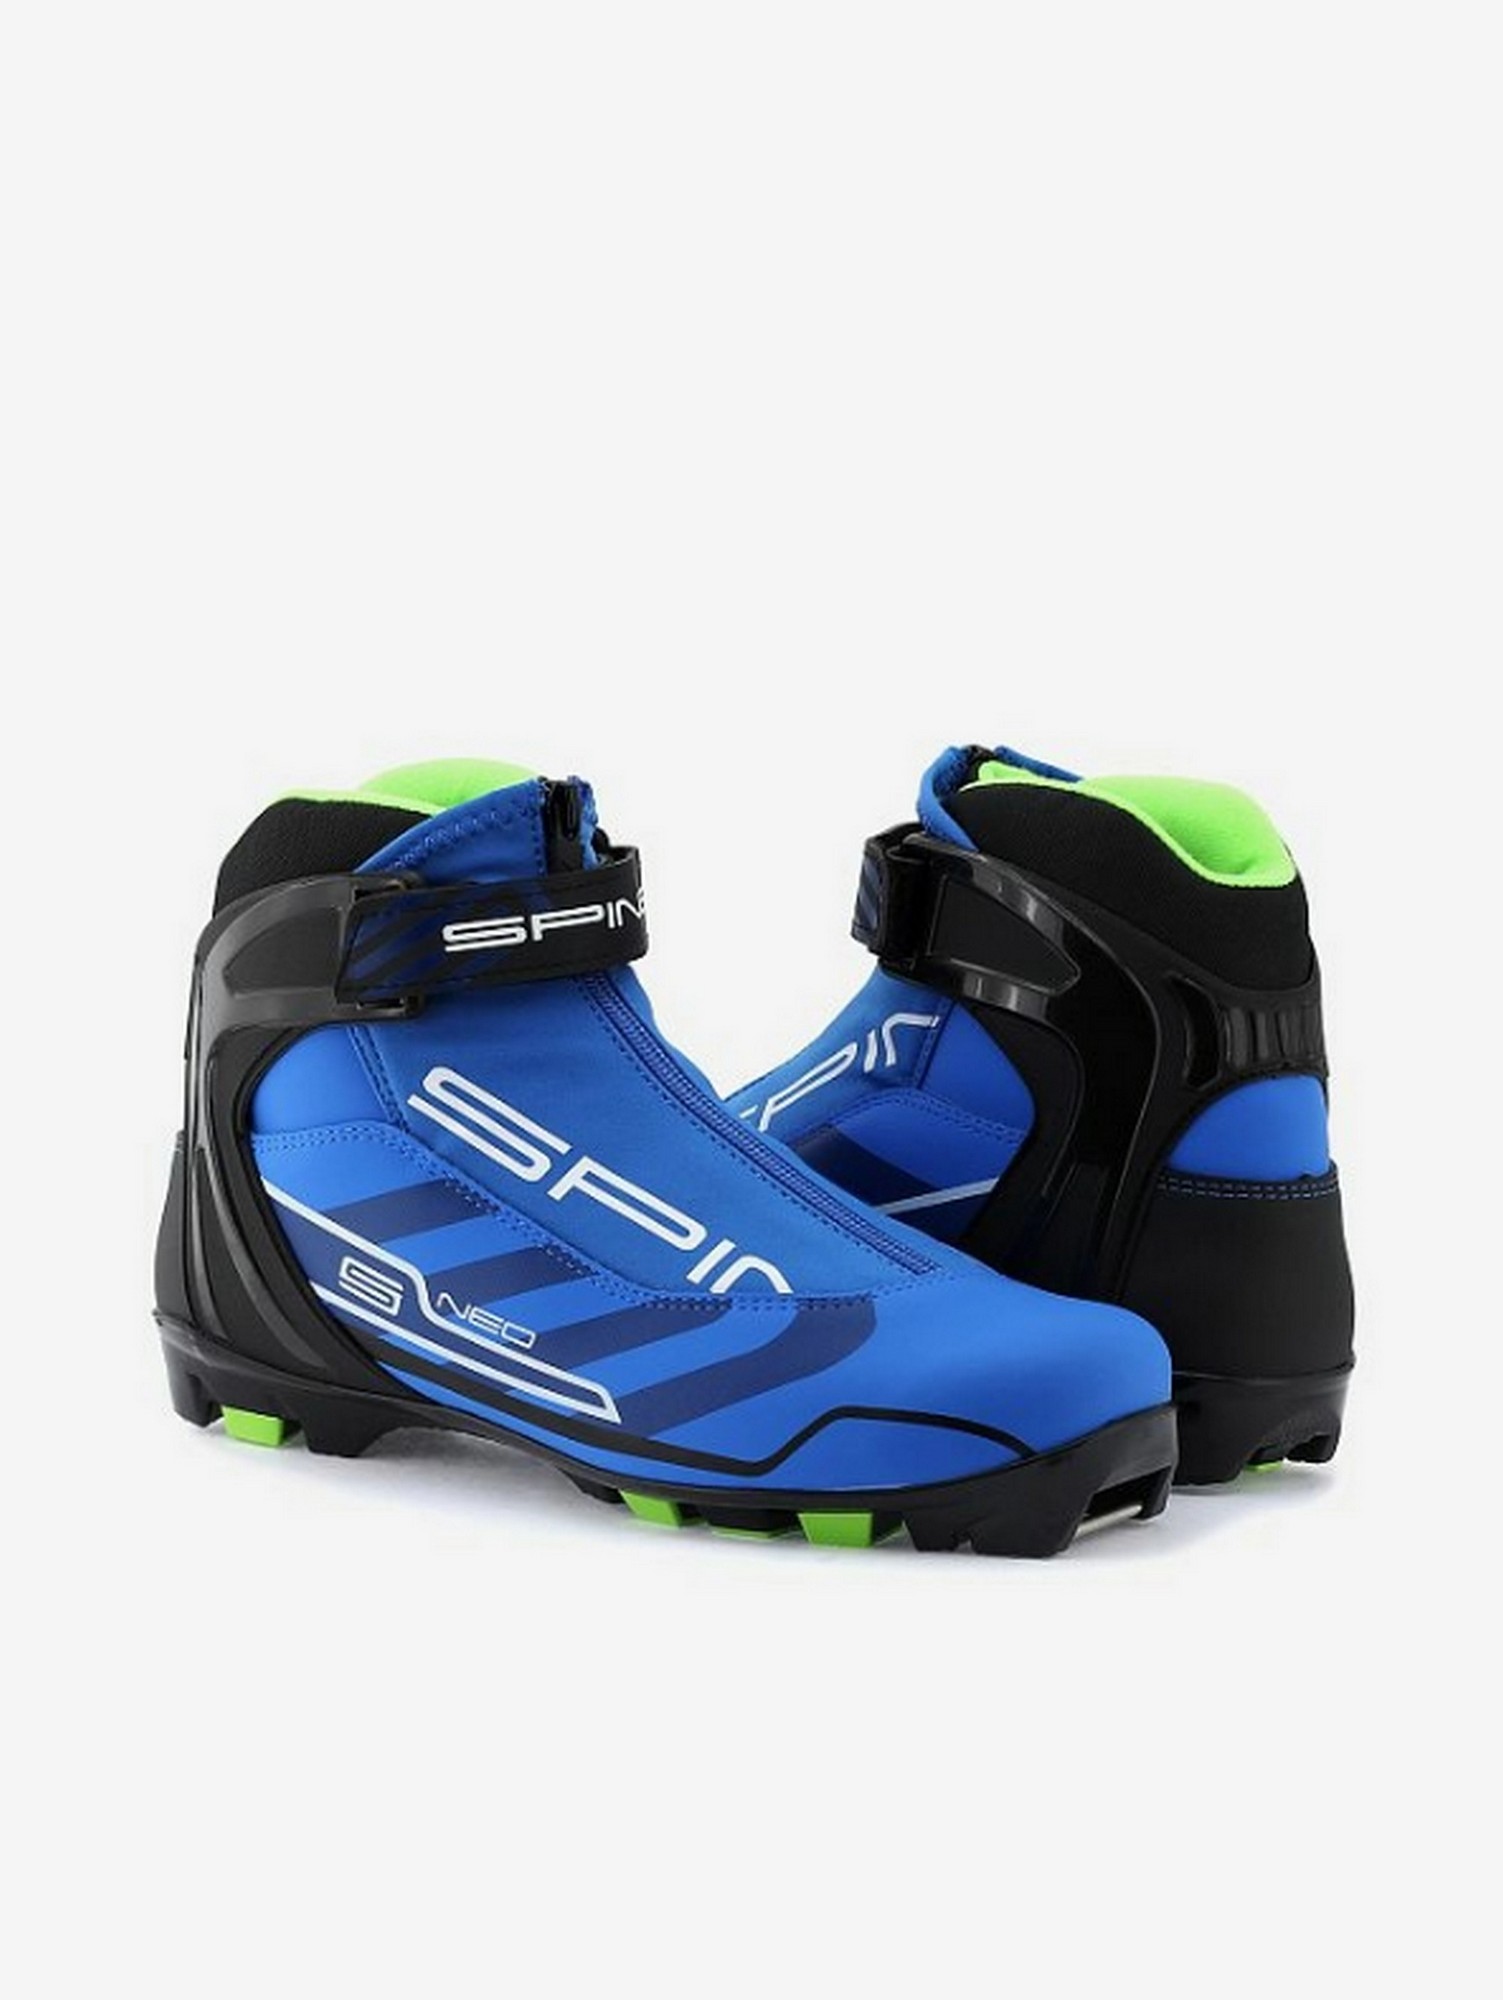 Лыжные ботинки NNN Spine Neo 161/1-22 синий 1503_2000